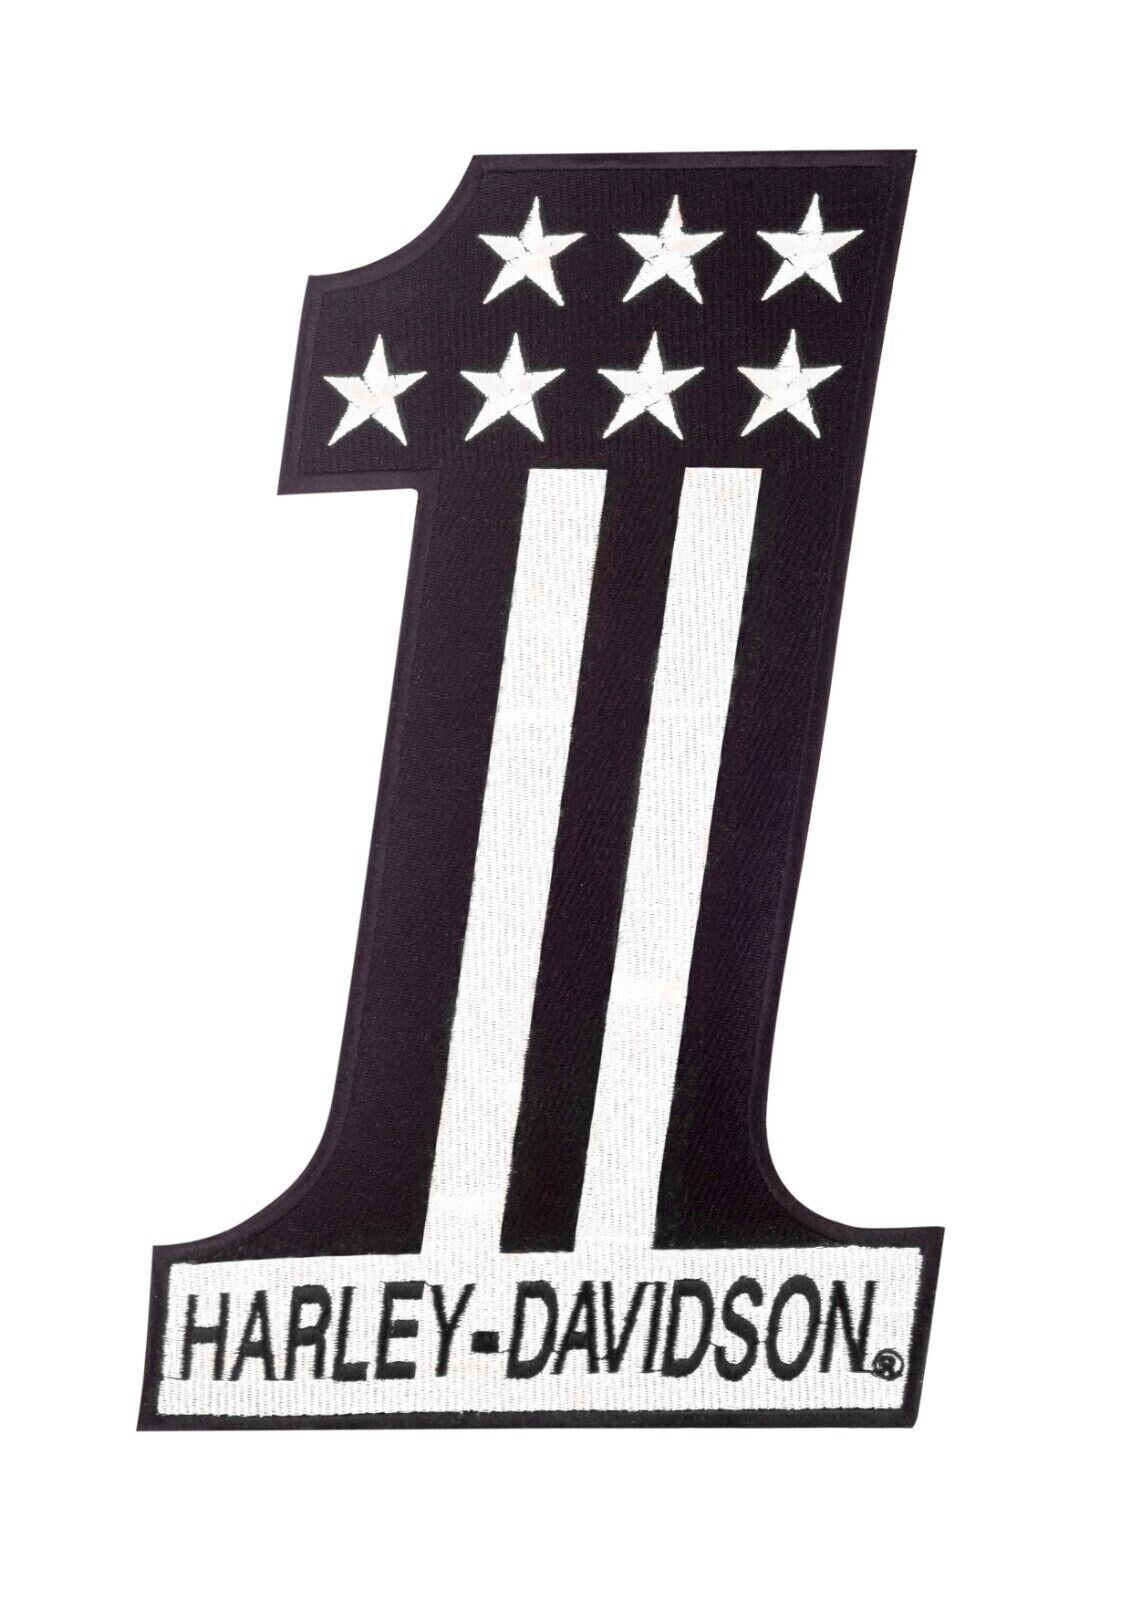 Harley Davidson #1 12 inch Large Patch- Harley Davidson Motorcycle White & Black